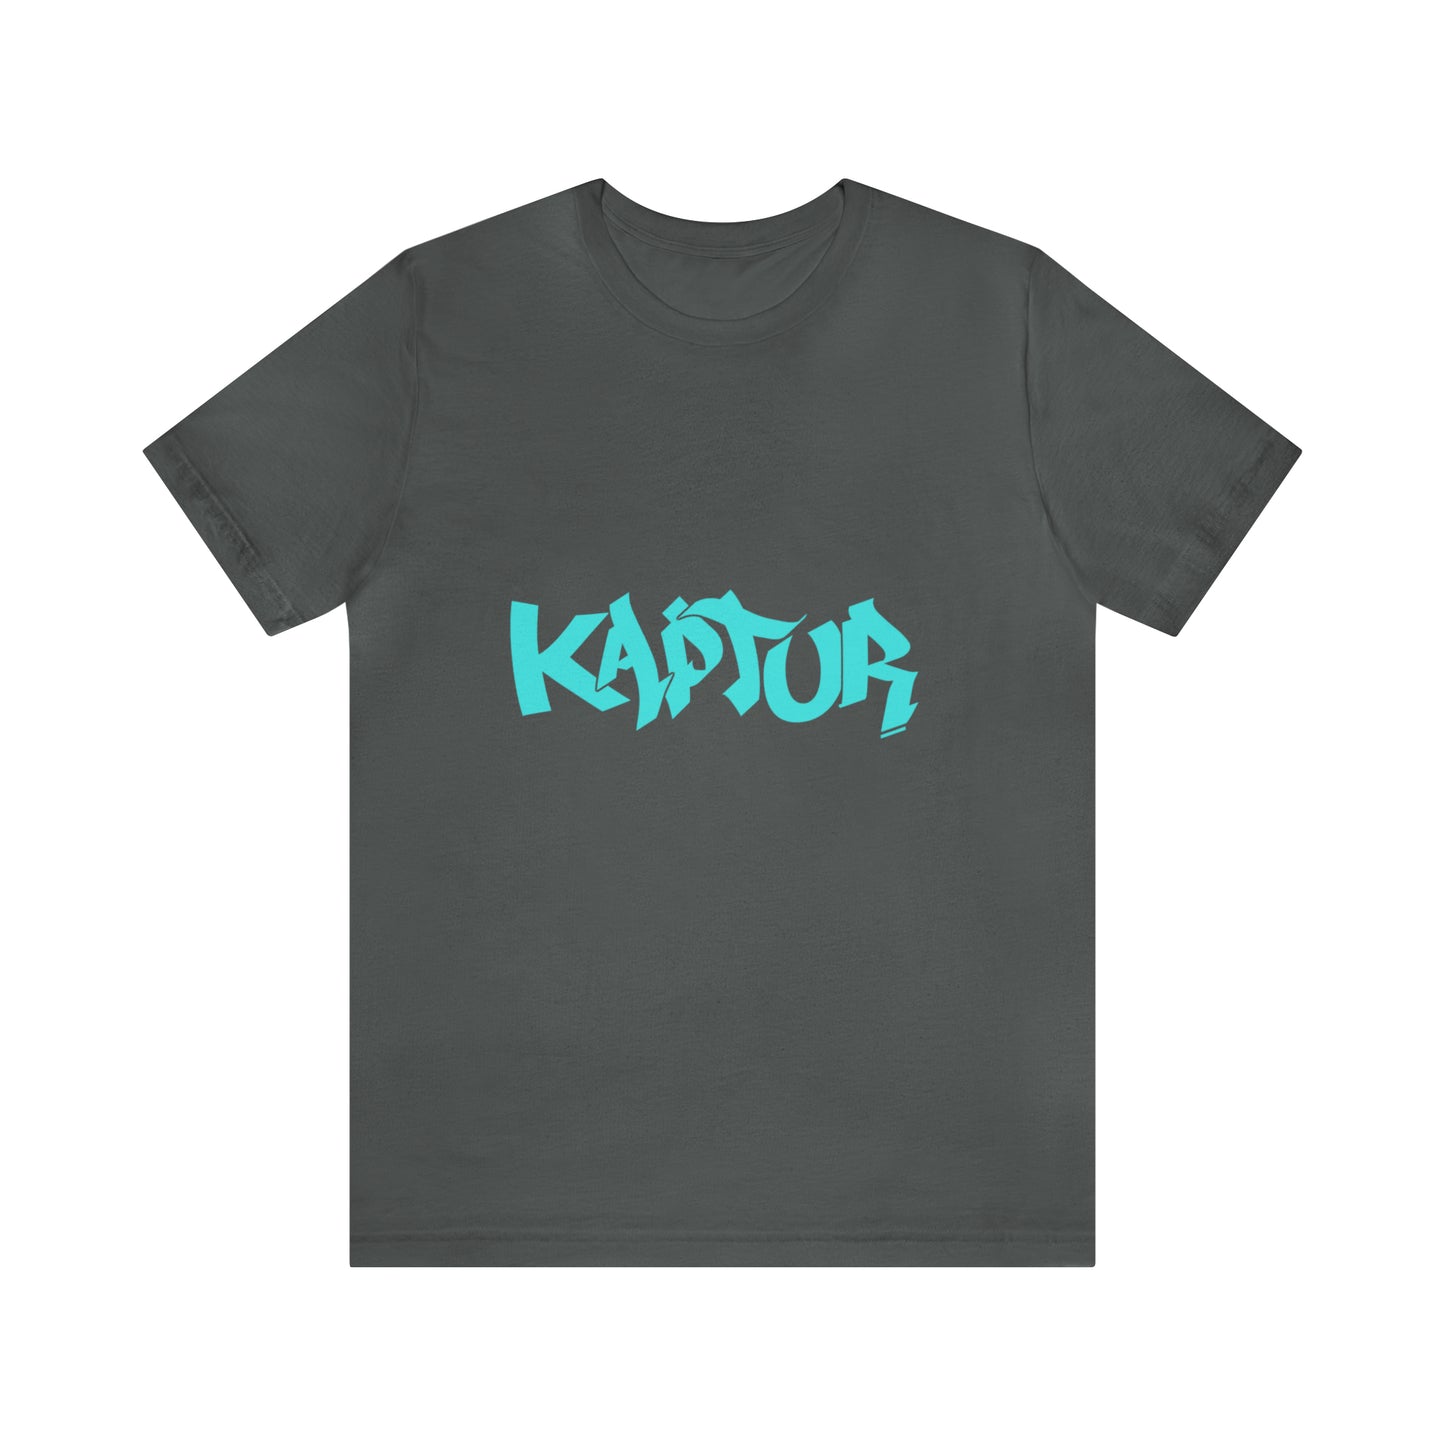 KAPTUR Unisex T-Shirt